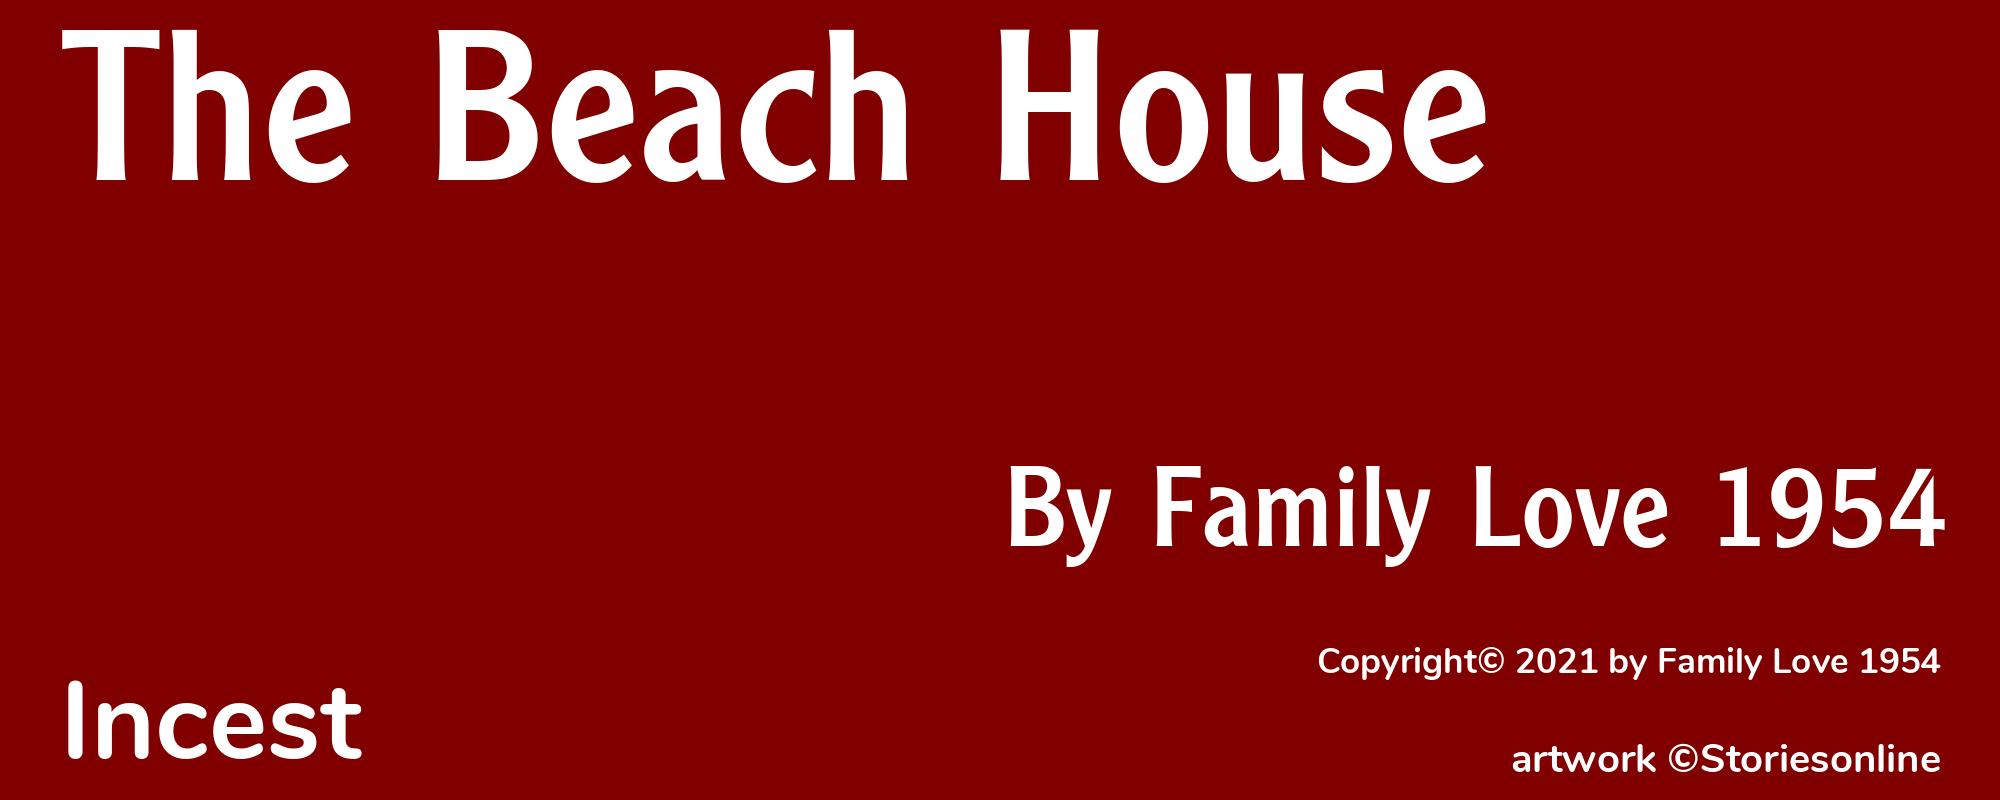 The Beach House - Cover